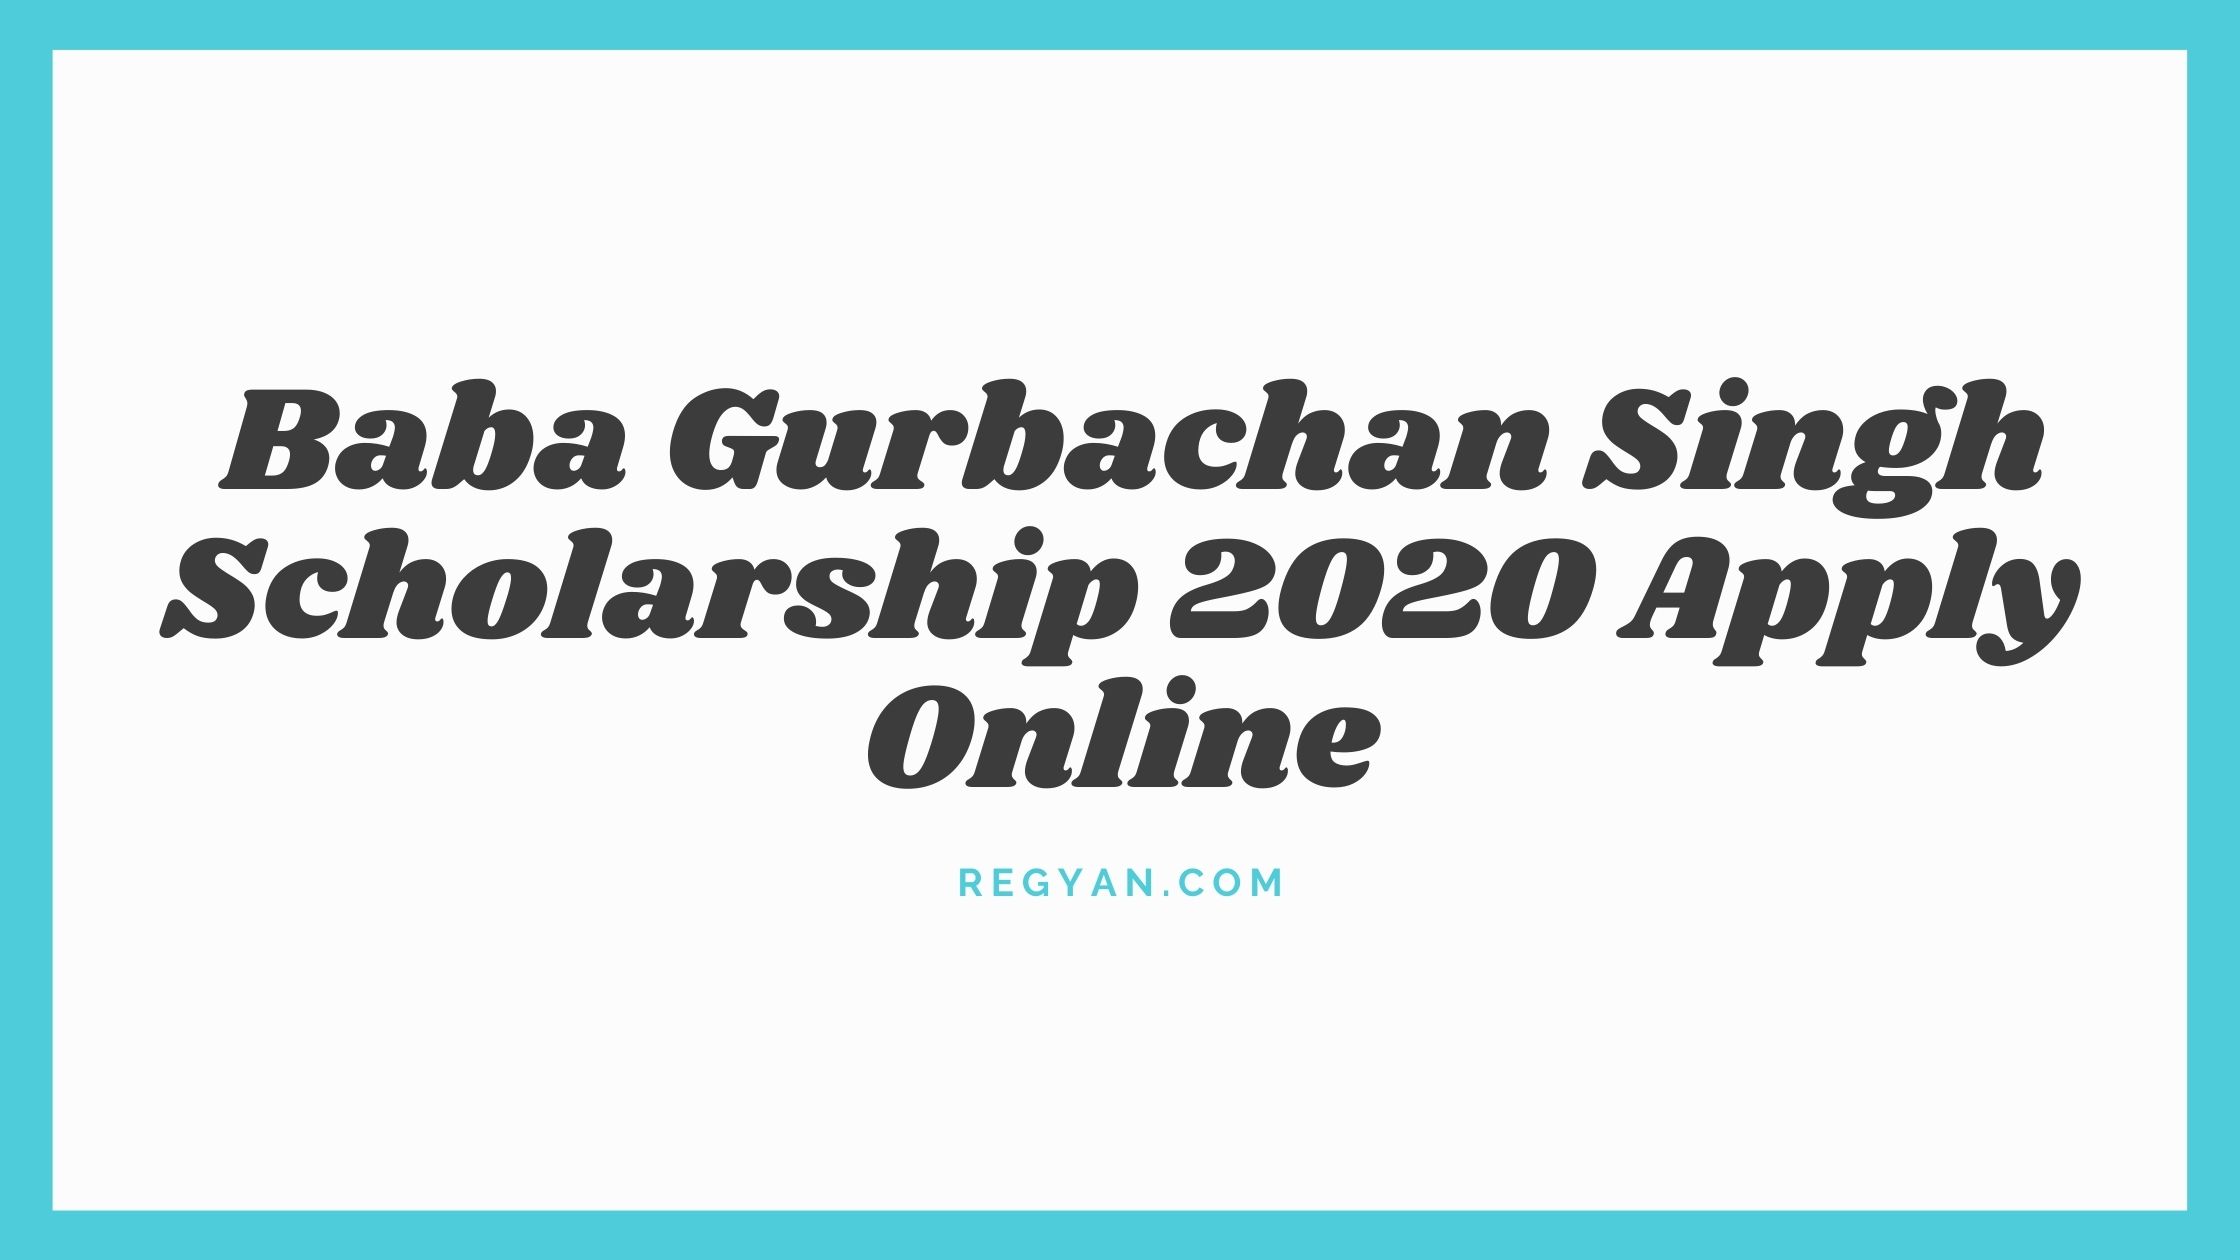 Baba Gurbachan Singh Scholarship 2020